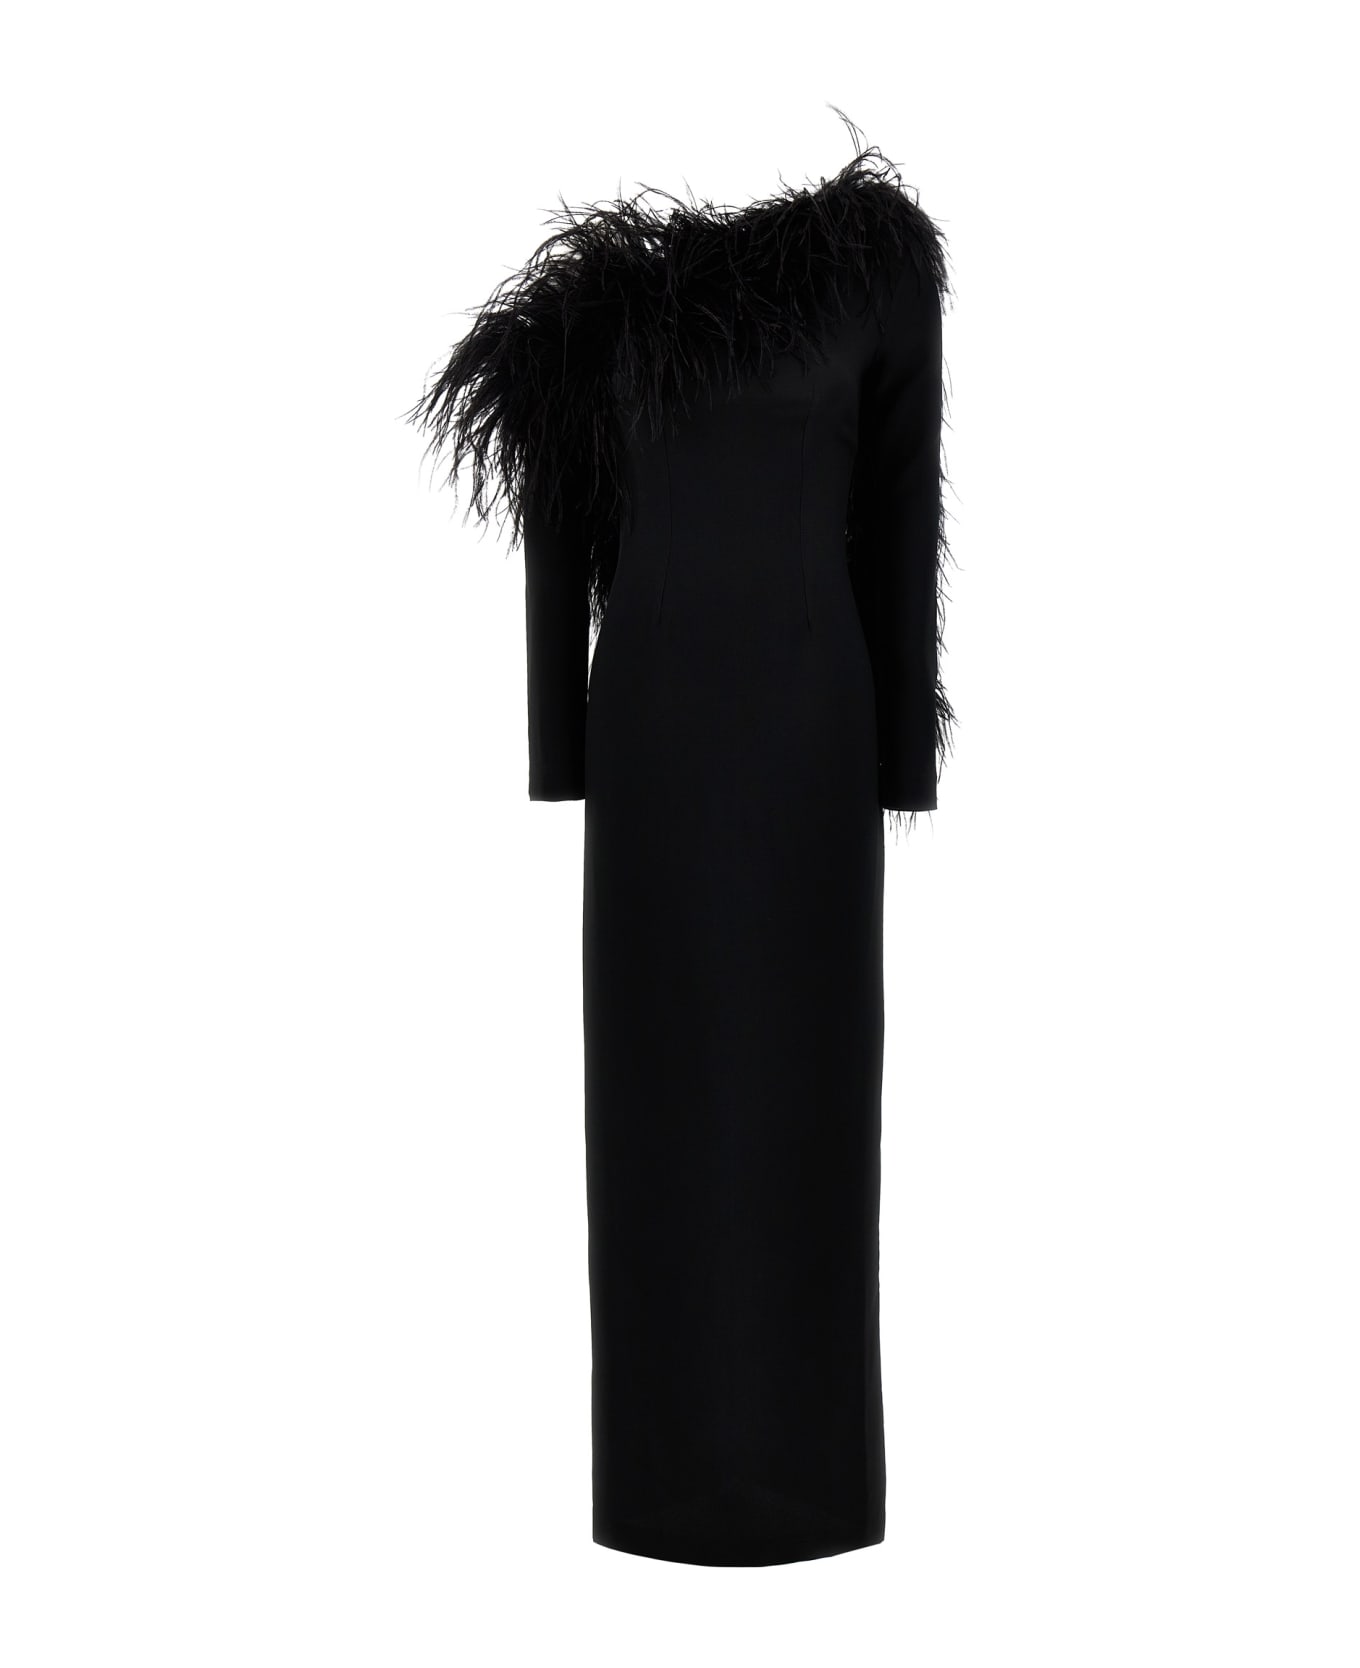 Taller Marmo 'garbo' Dress - Black  